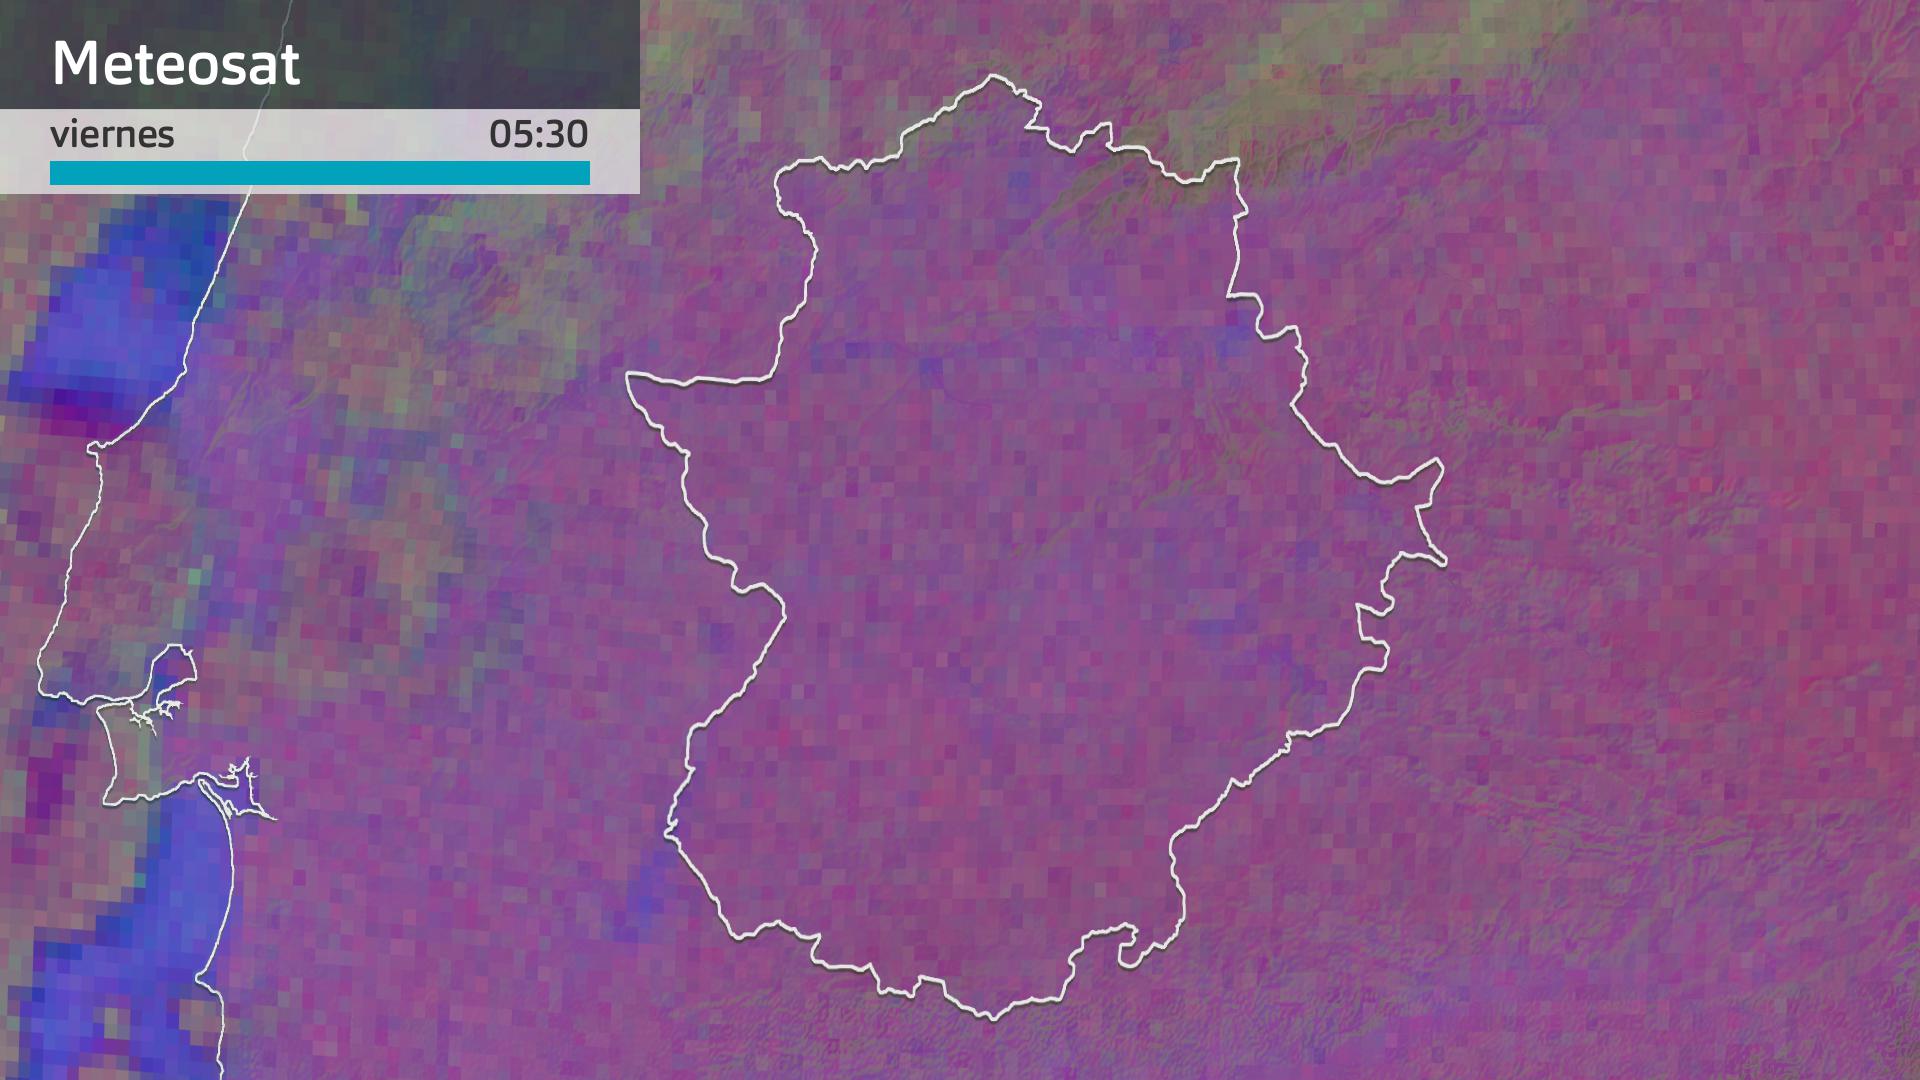 Imagen del Meteosat viernes 1 de marzo 5:30 h.